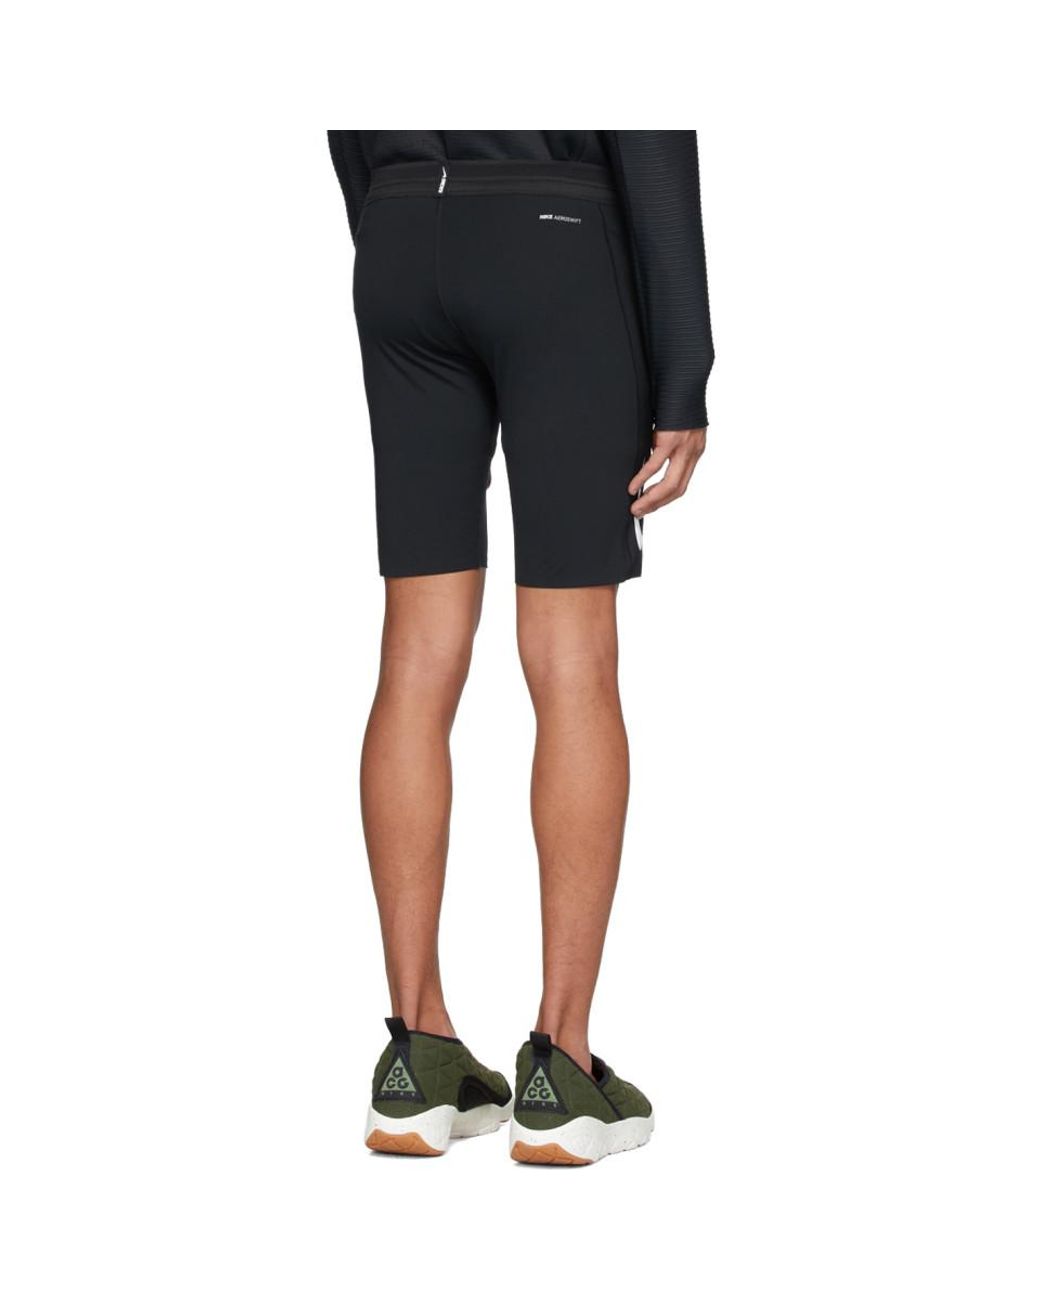 Nike Aeroswift 1/2 Tights Running Shorts - Men's Large $90.00 CJ7843 010  Black